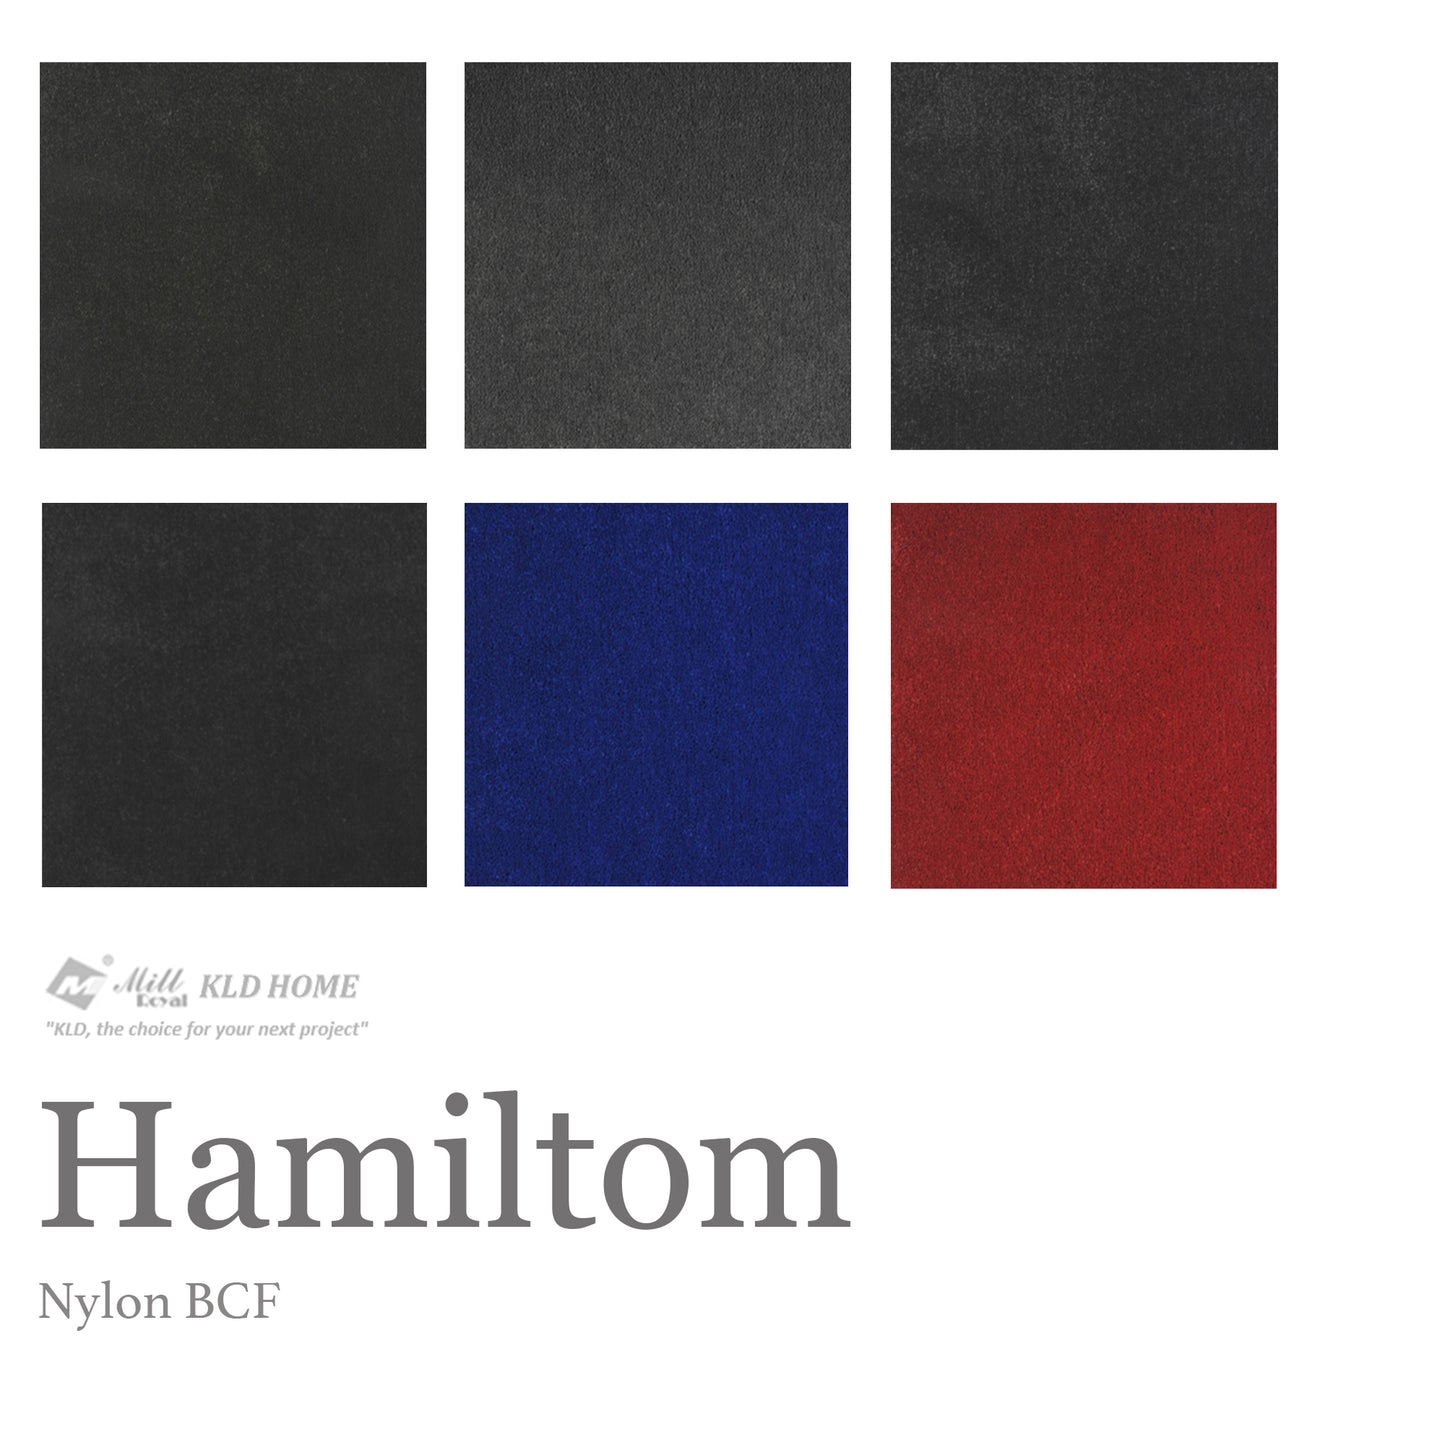 Hamilton Nylon Carpet Collection Nylon Carpet by KLD Home